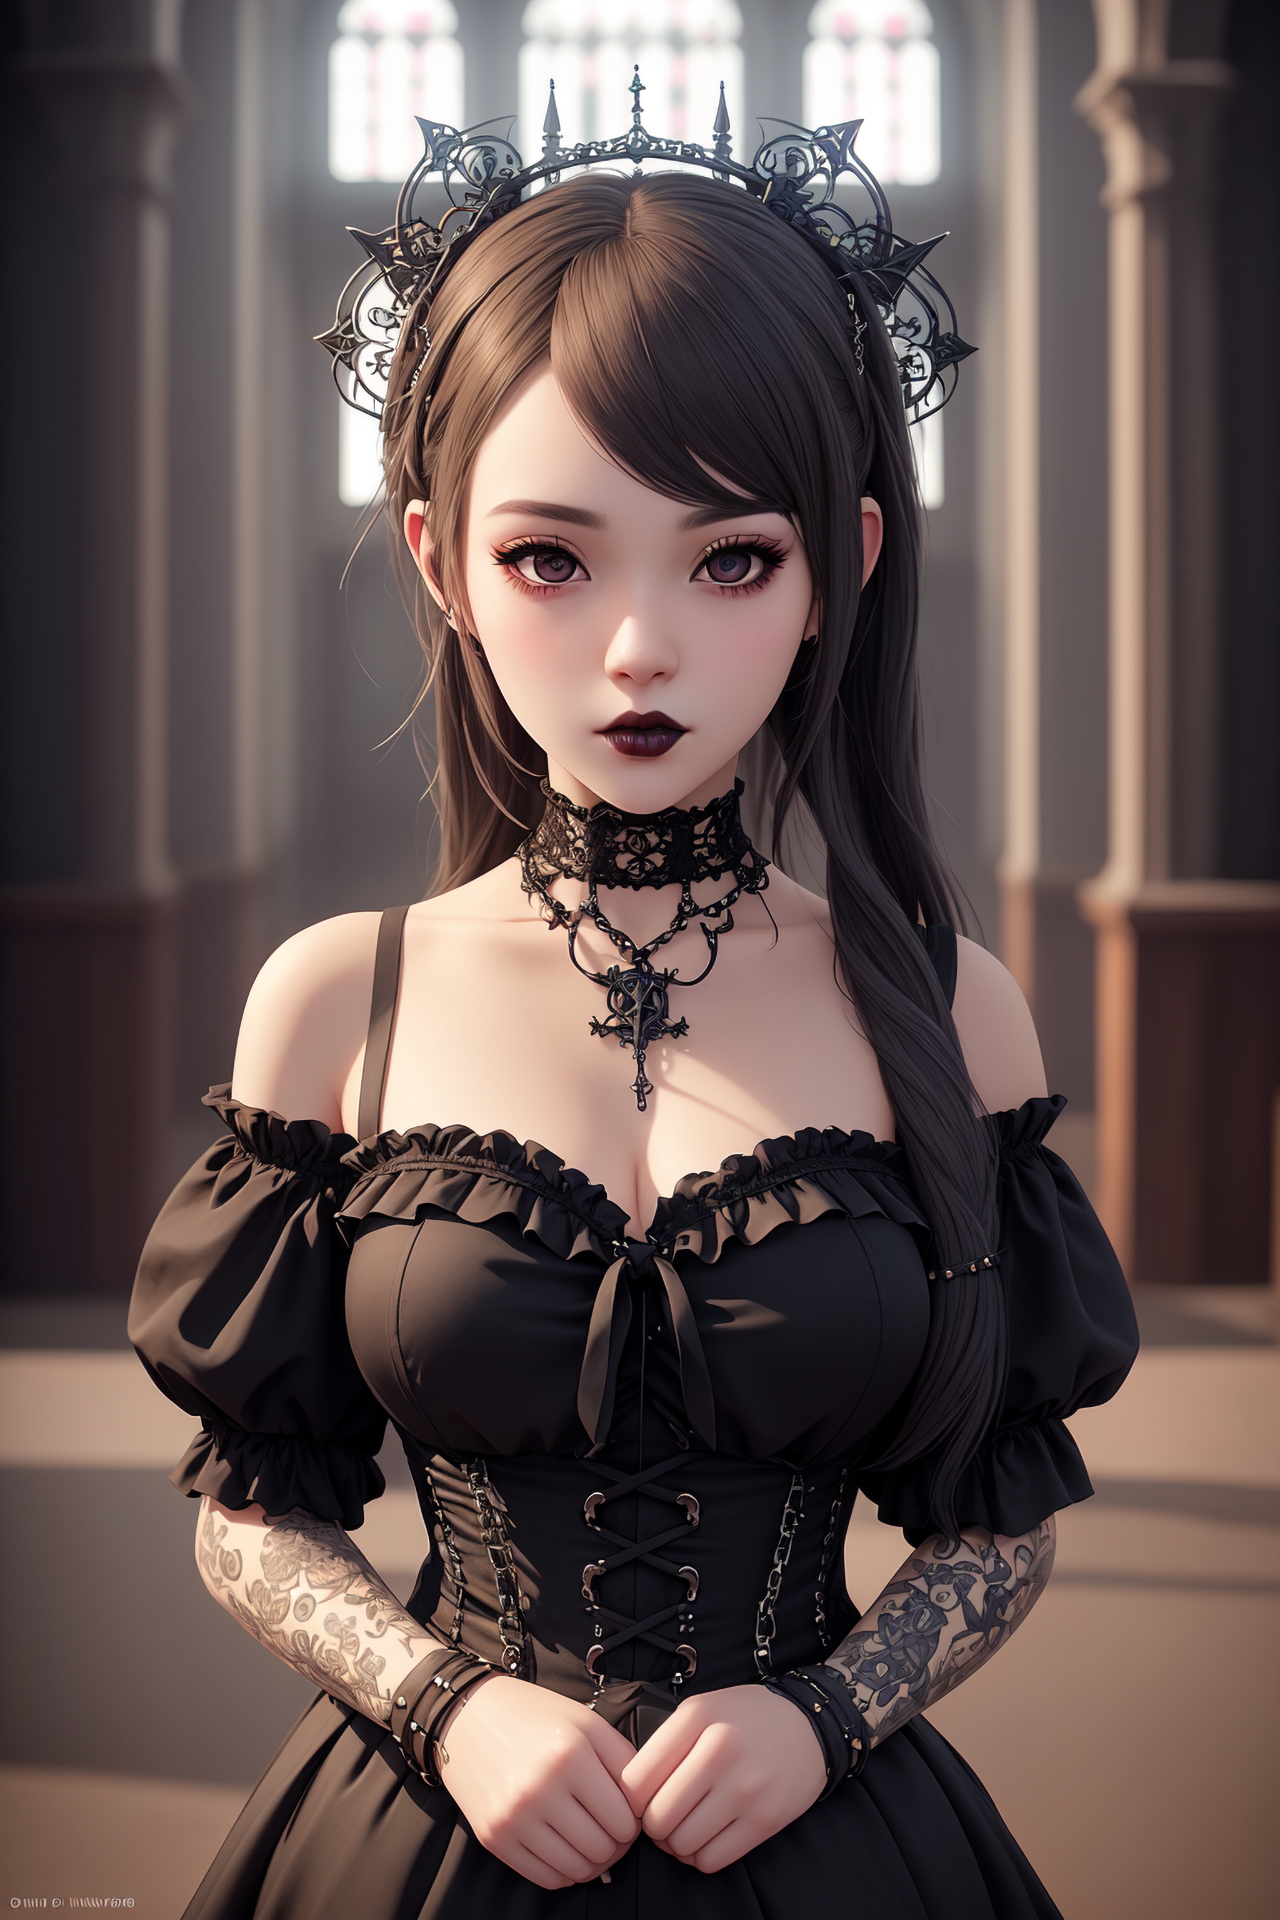 Cute Goth Anime Girl by BlueJacketSword on DeviantArt